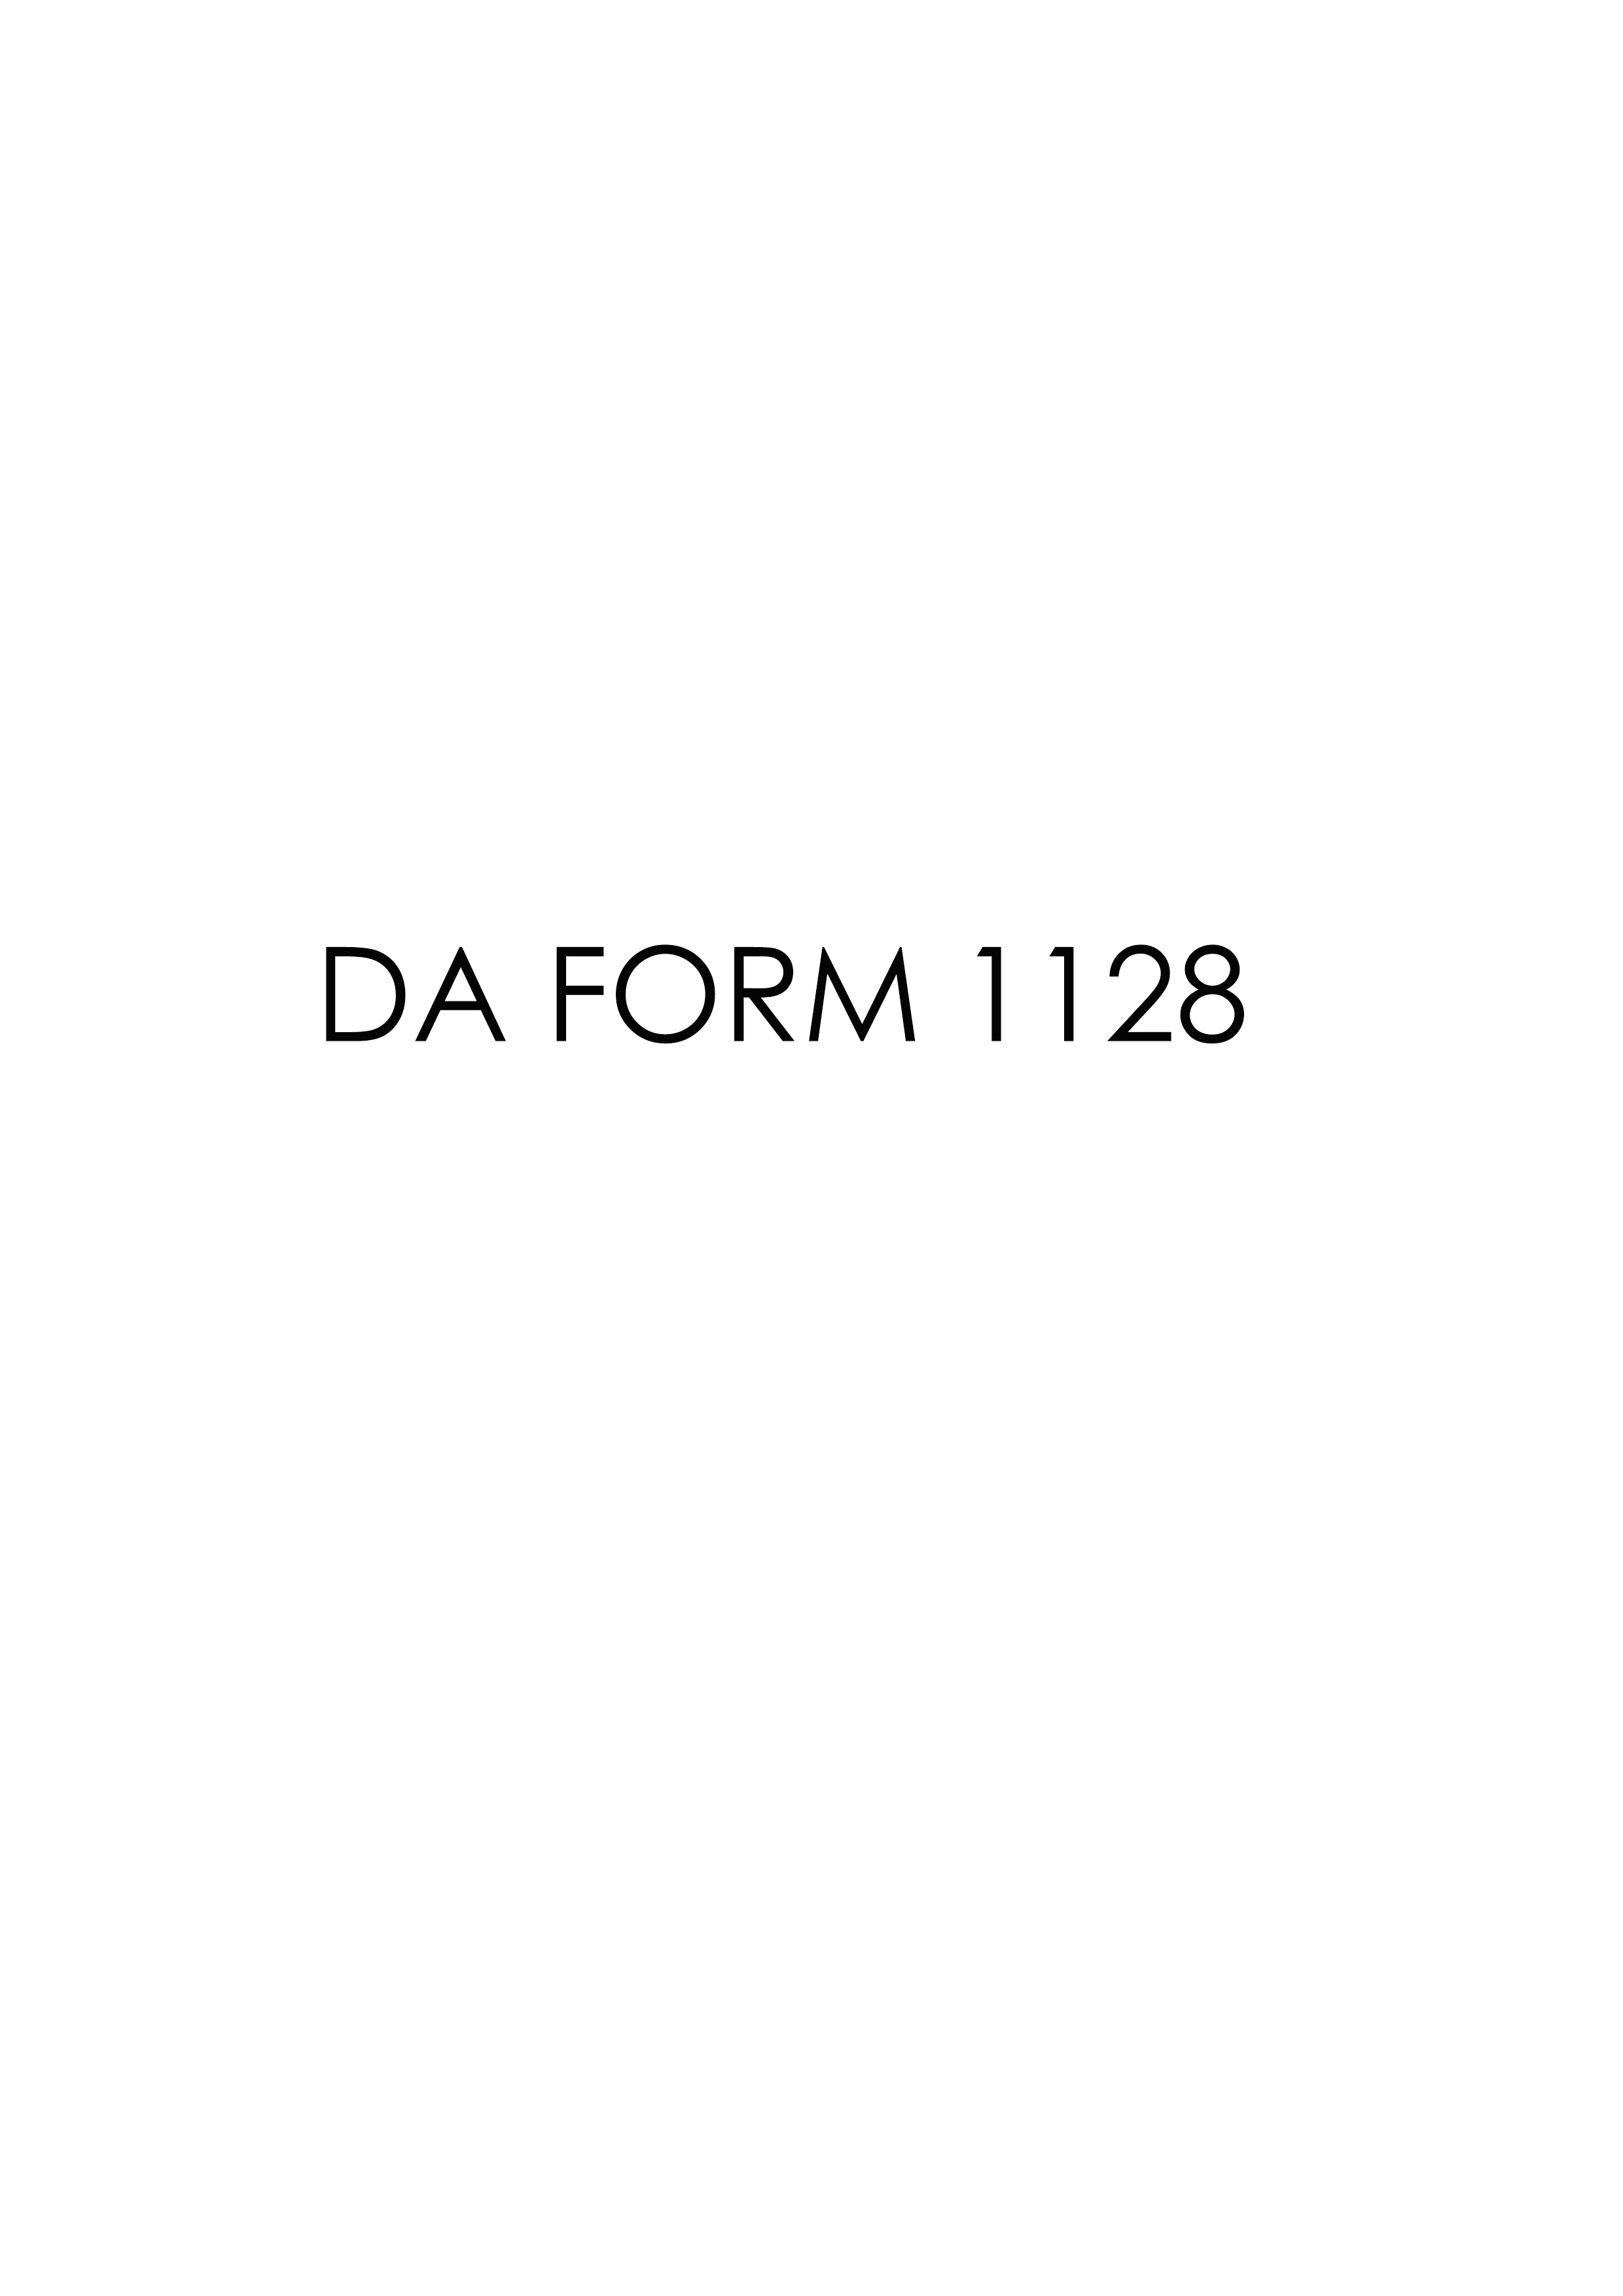 da Form 1128 fillable